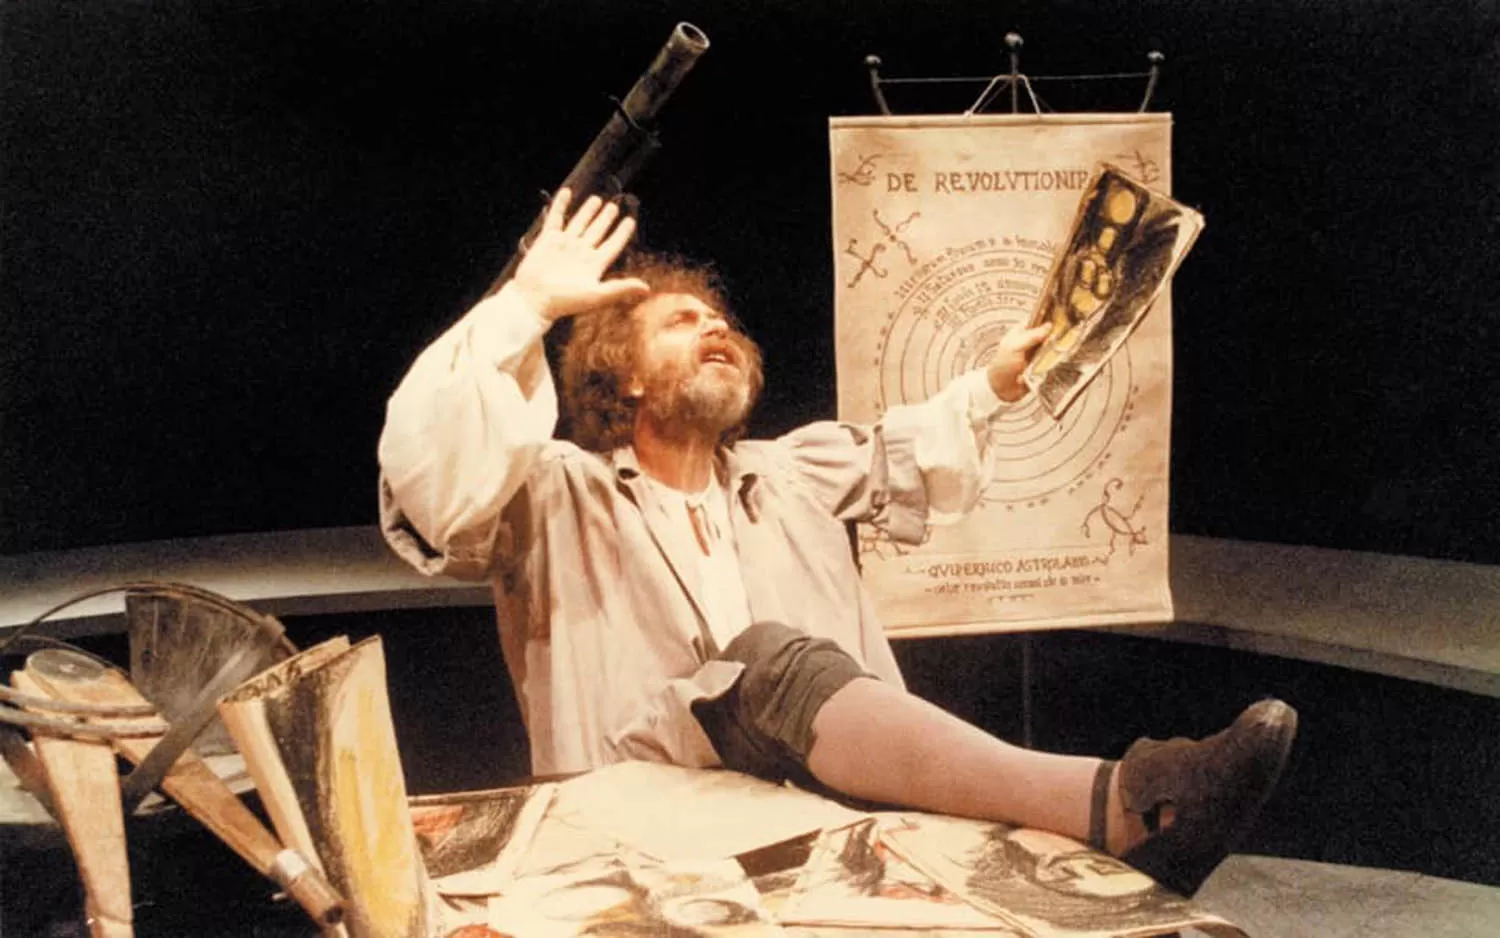 Teatro on line: puesta emblemática de “Galileo Galilei”